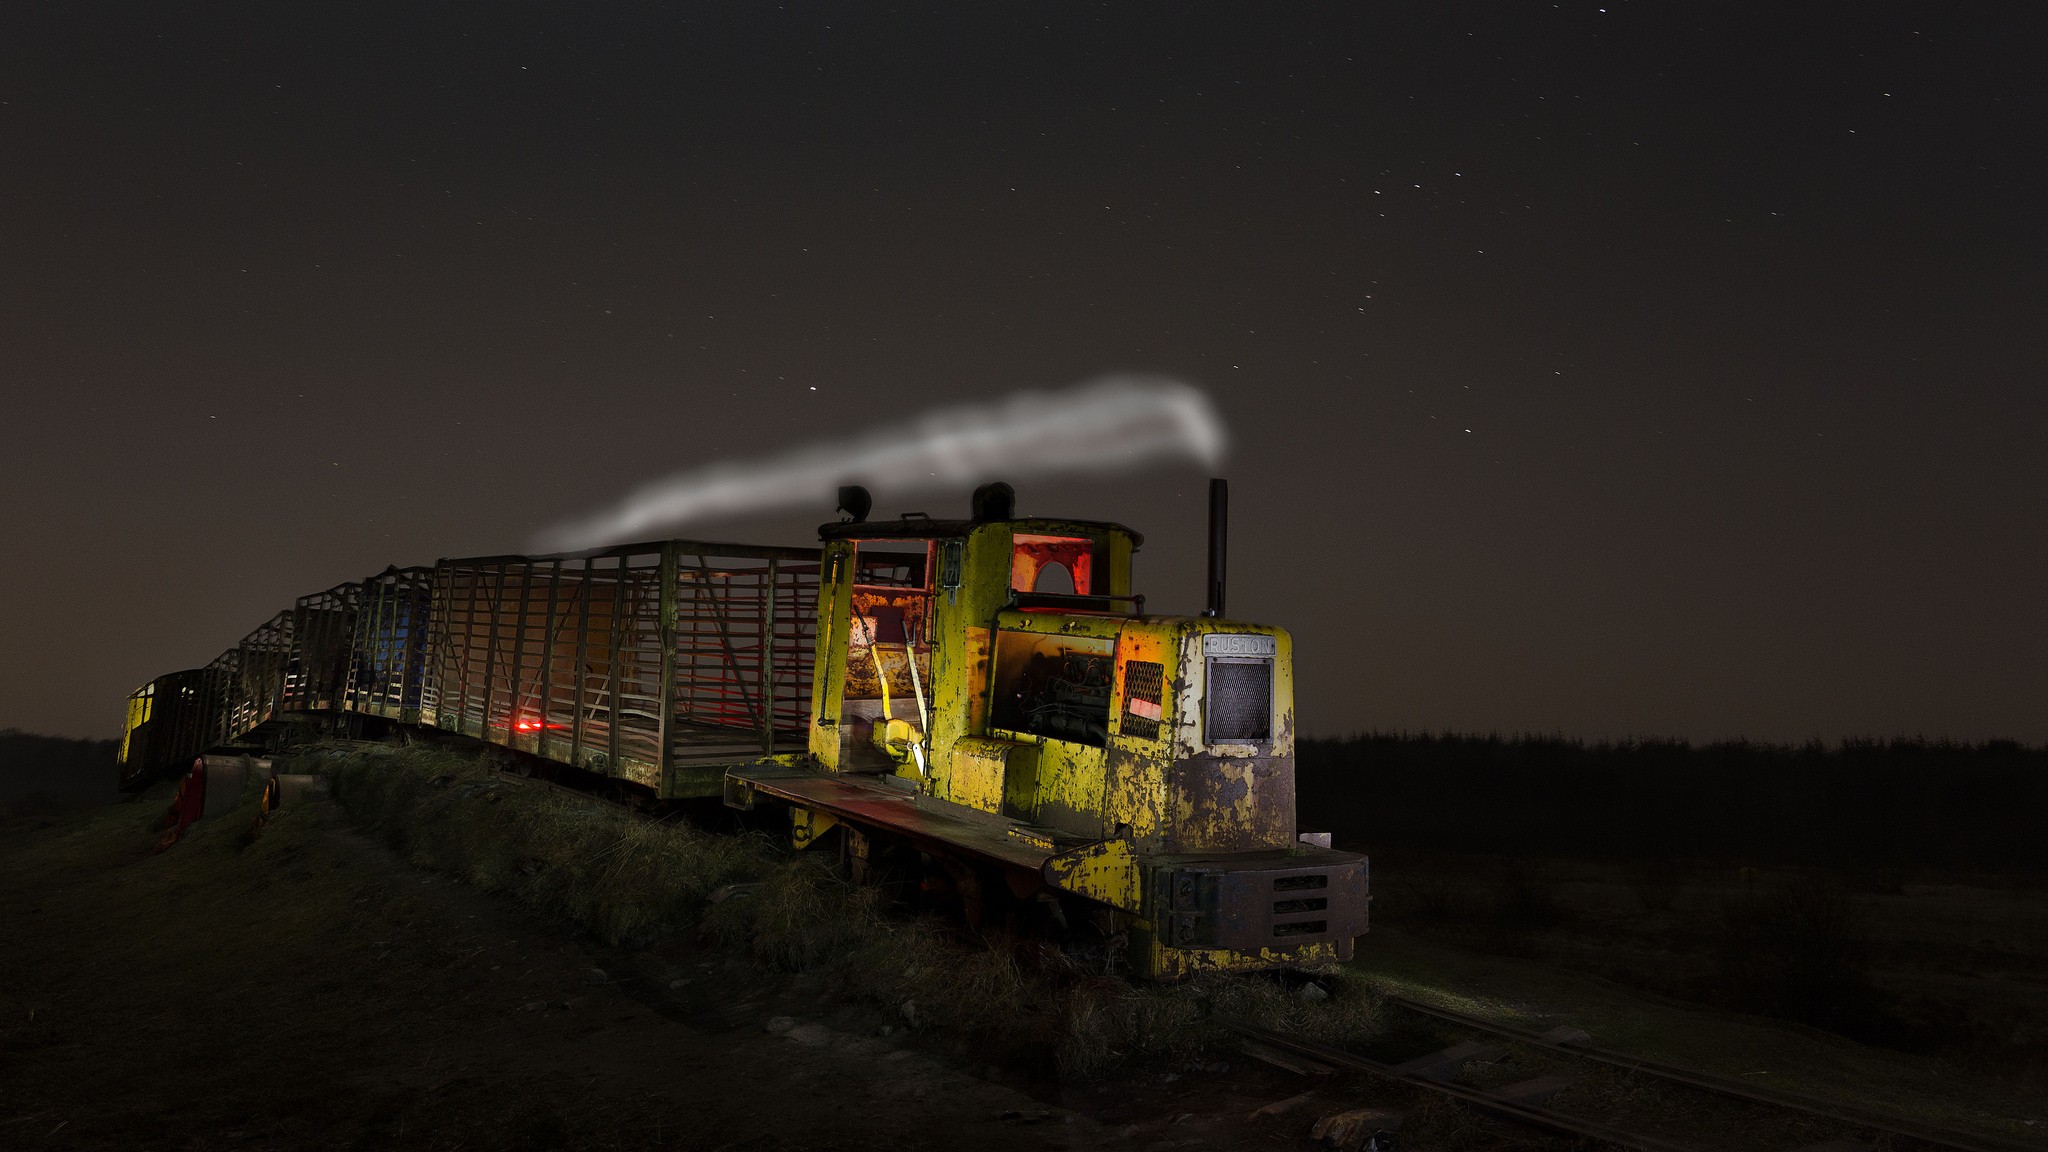 General 2048x1152 night train vehicle sky stars smoke